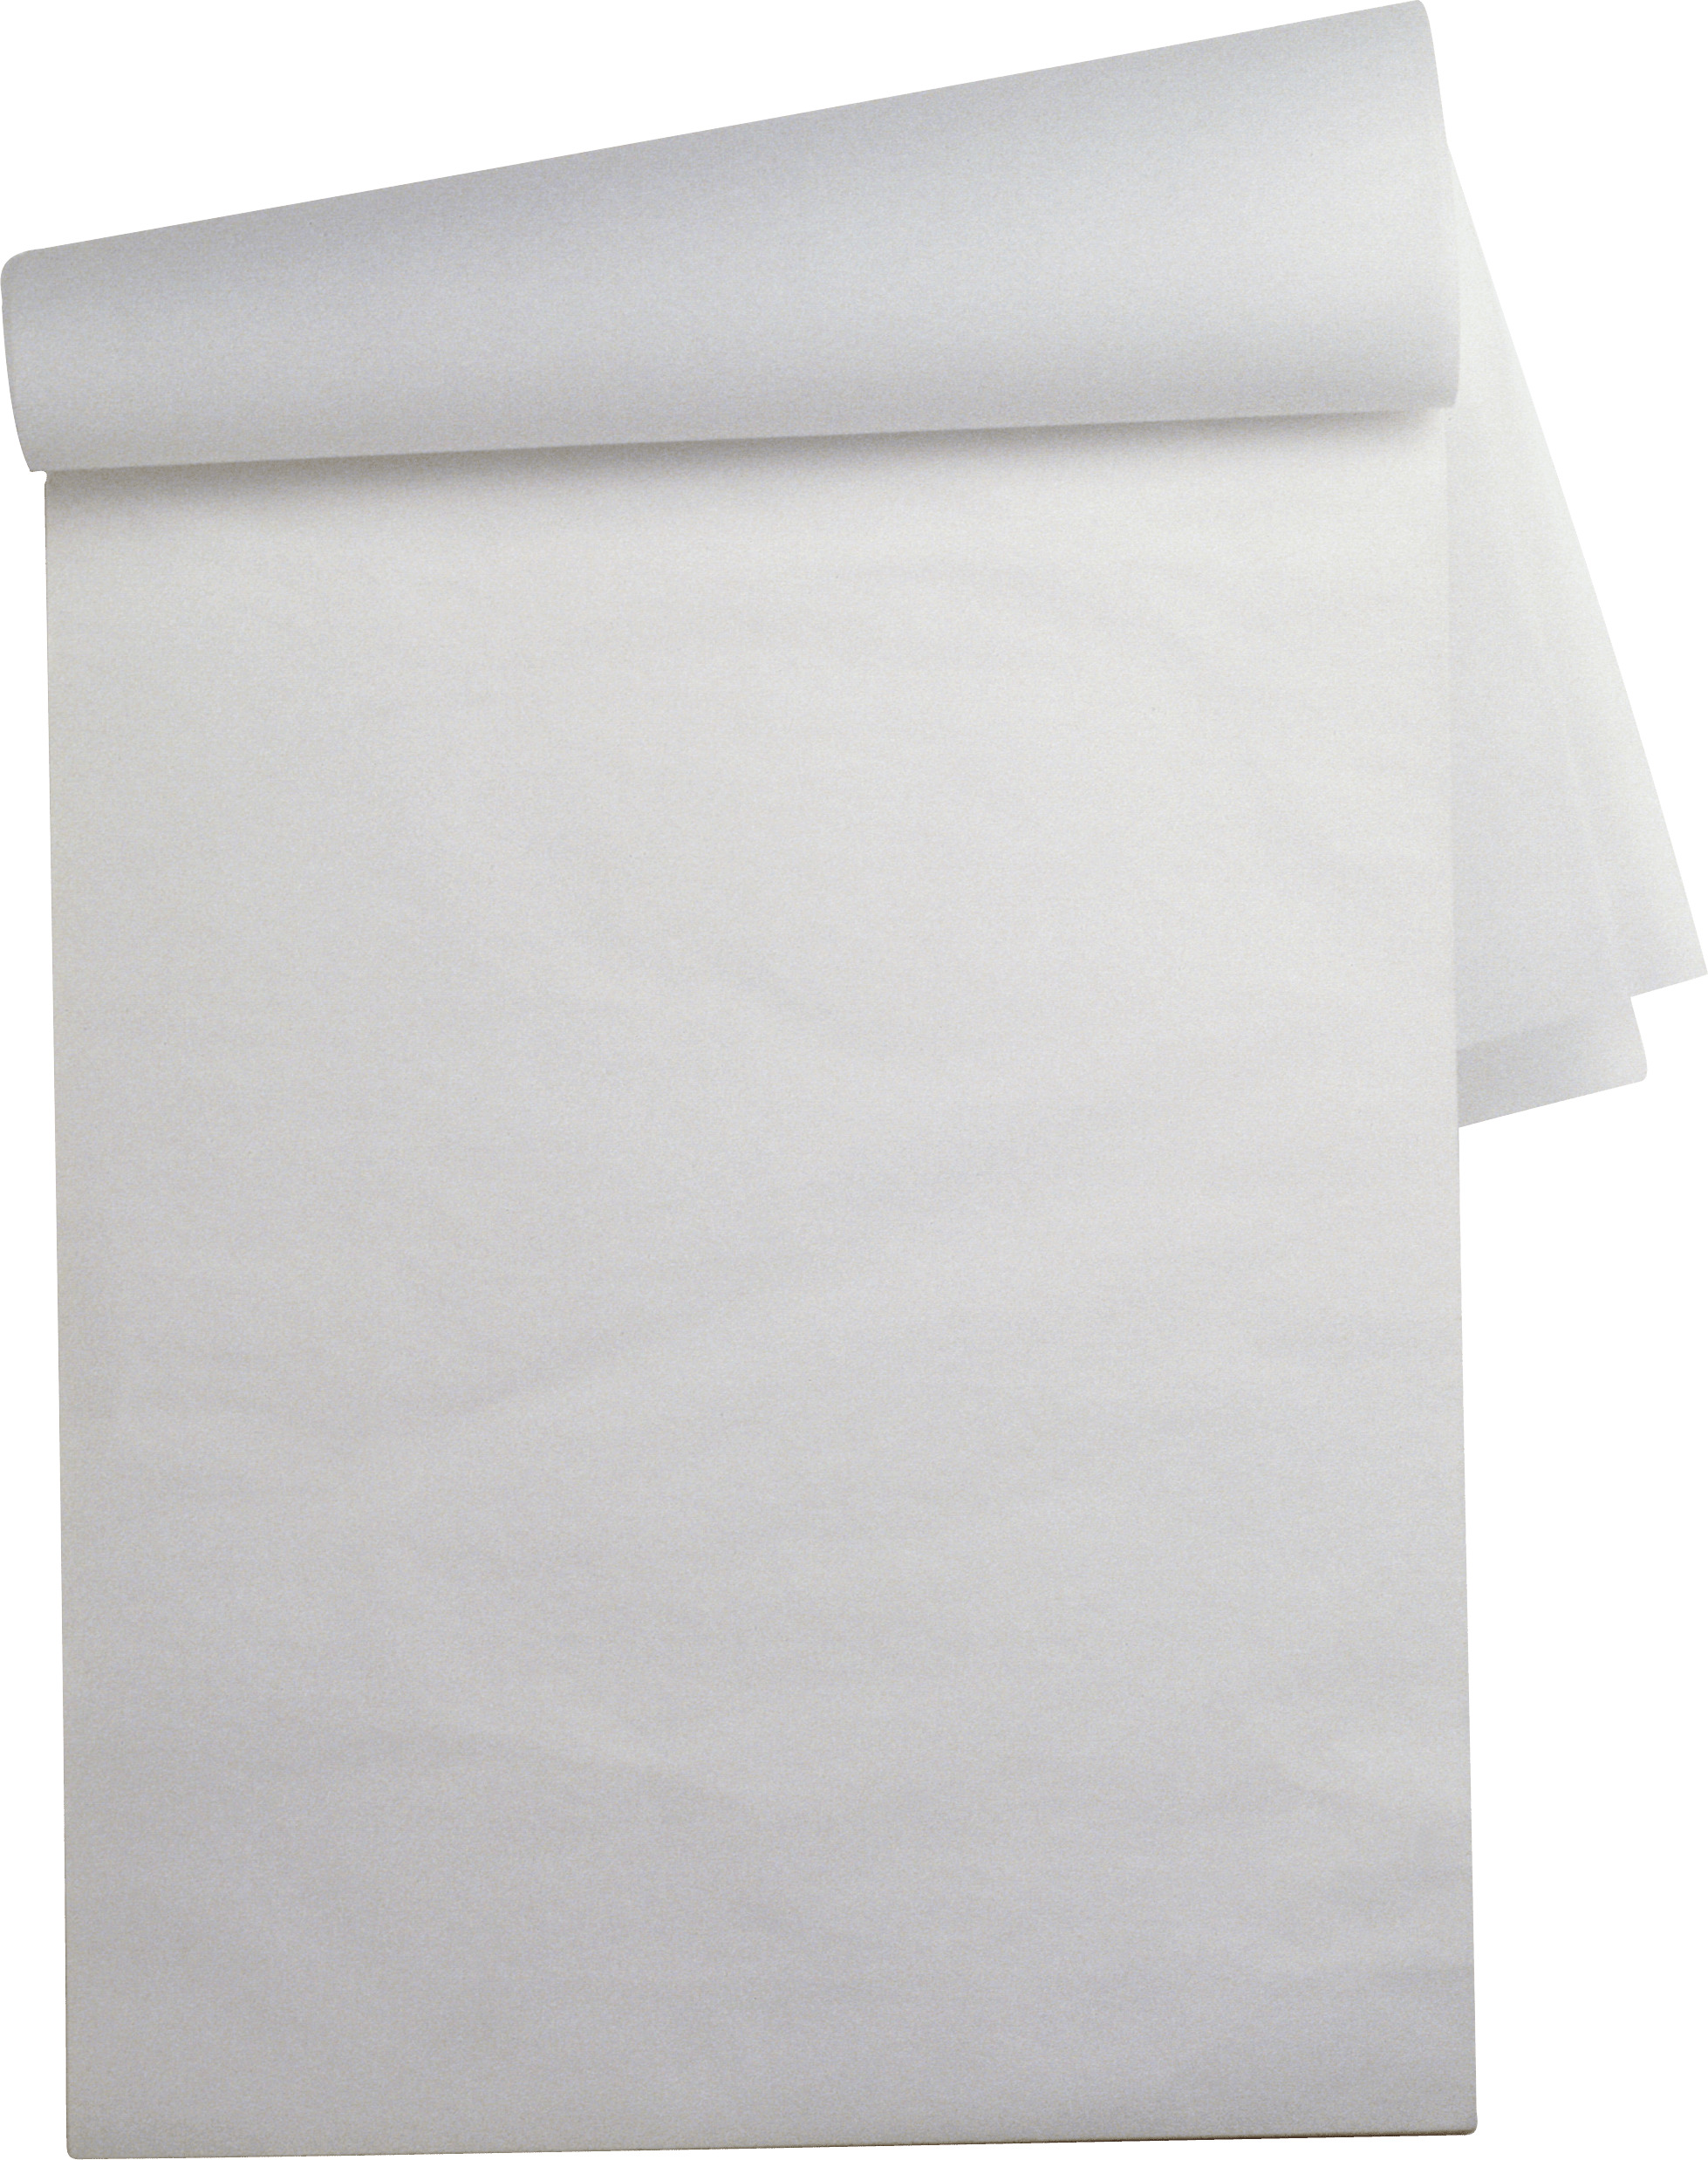 White Folded Paper Sheet icons